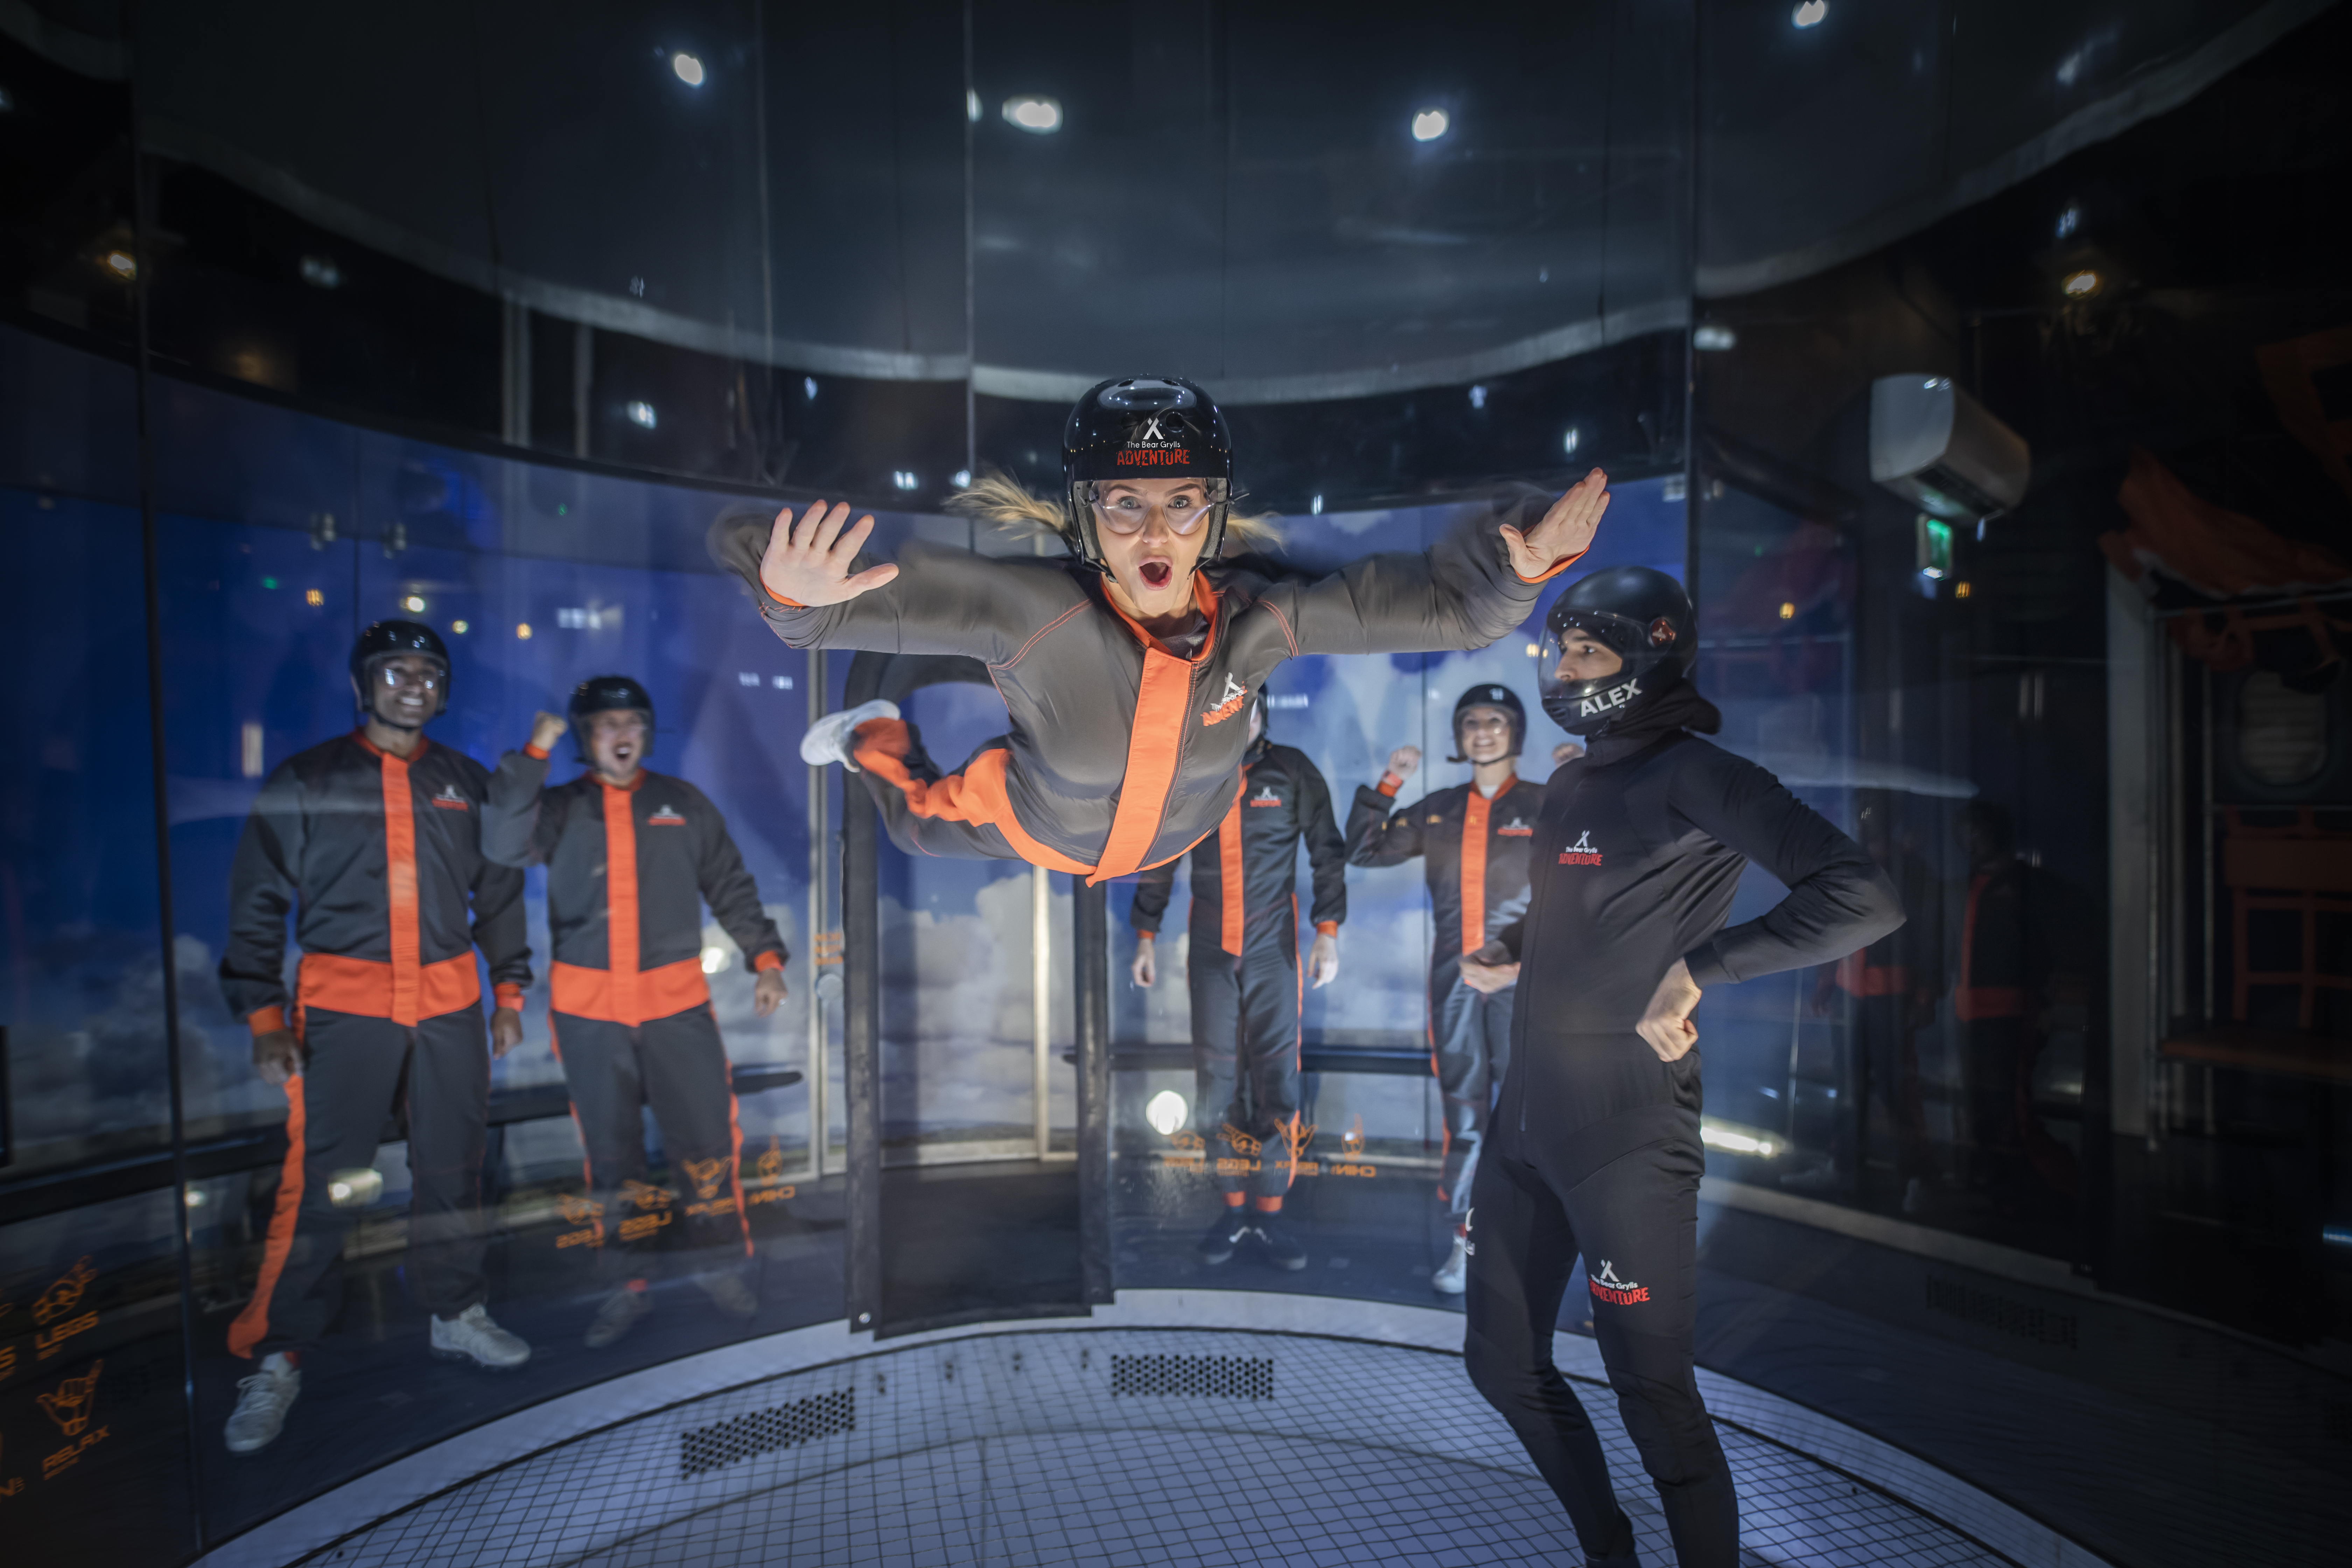 Woman flies in iFLY indoor skydiving tunnel at The Bear Grylls Adventure Birmingham